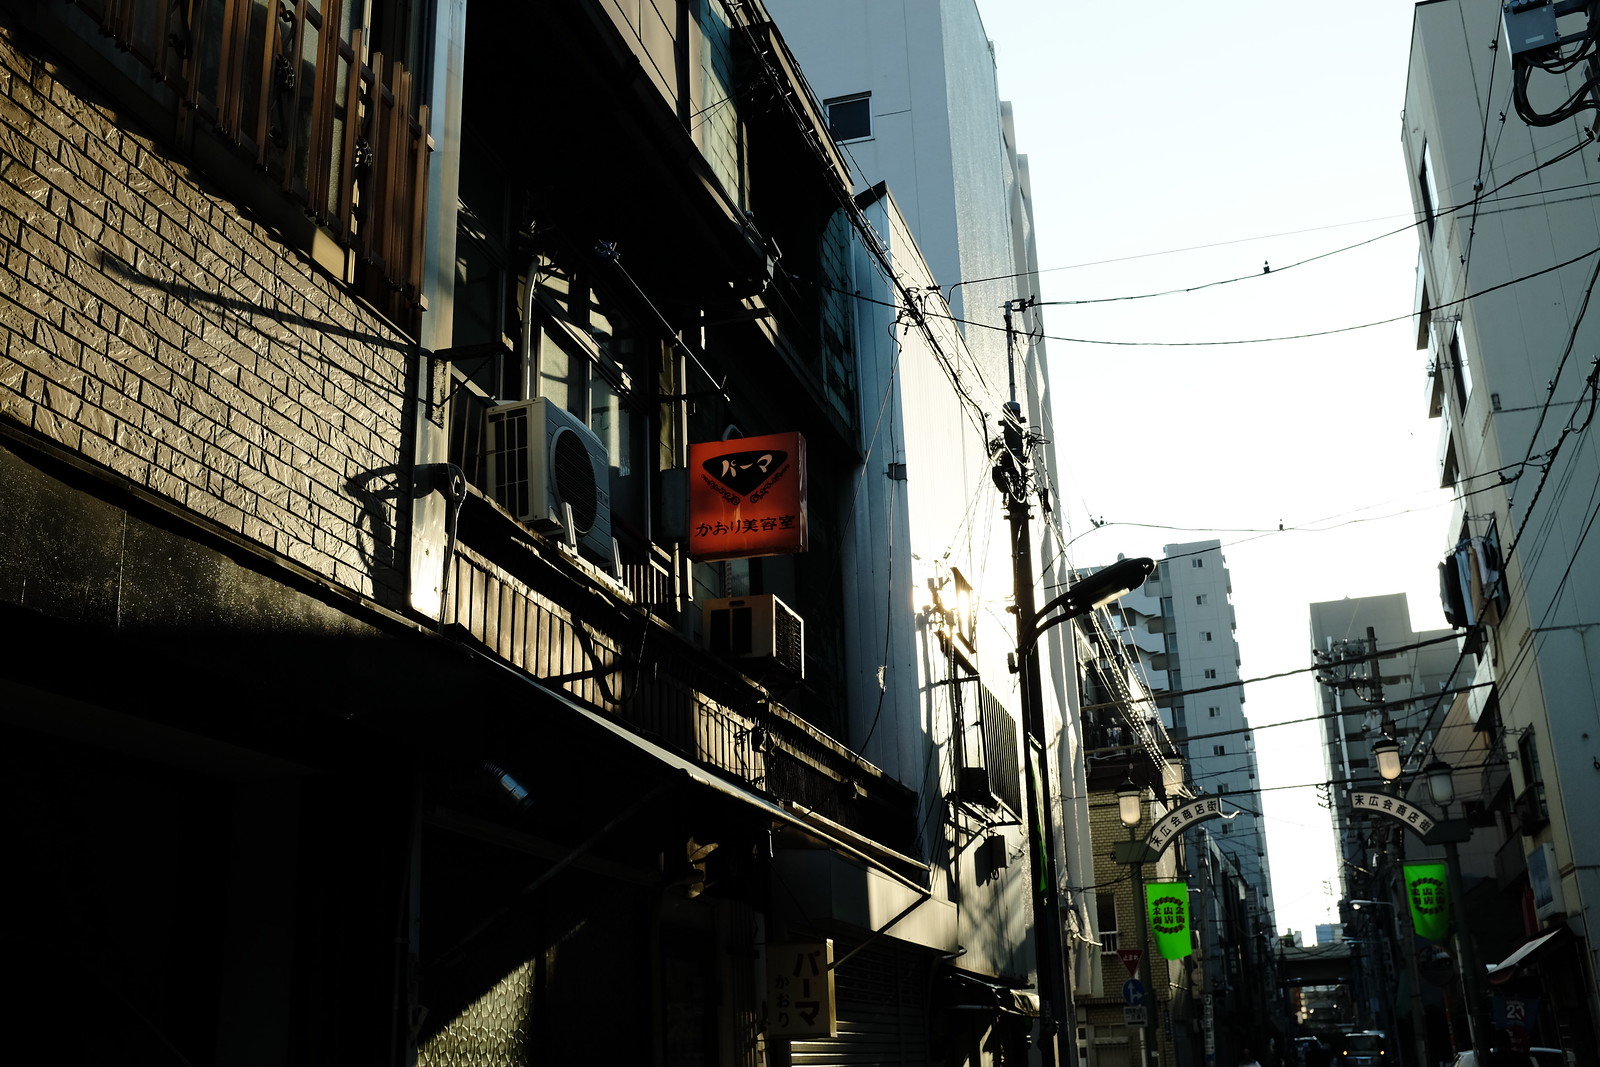 The Taito-ku Tokyo photo by FUJIFILM X100S.